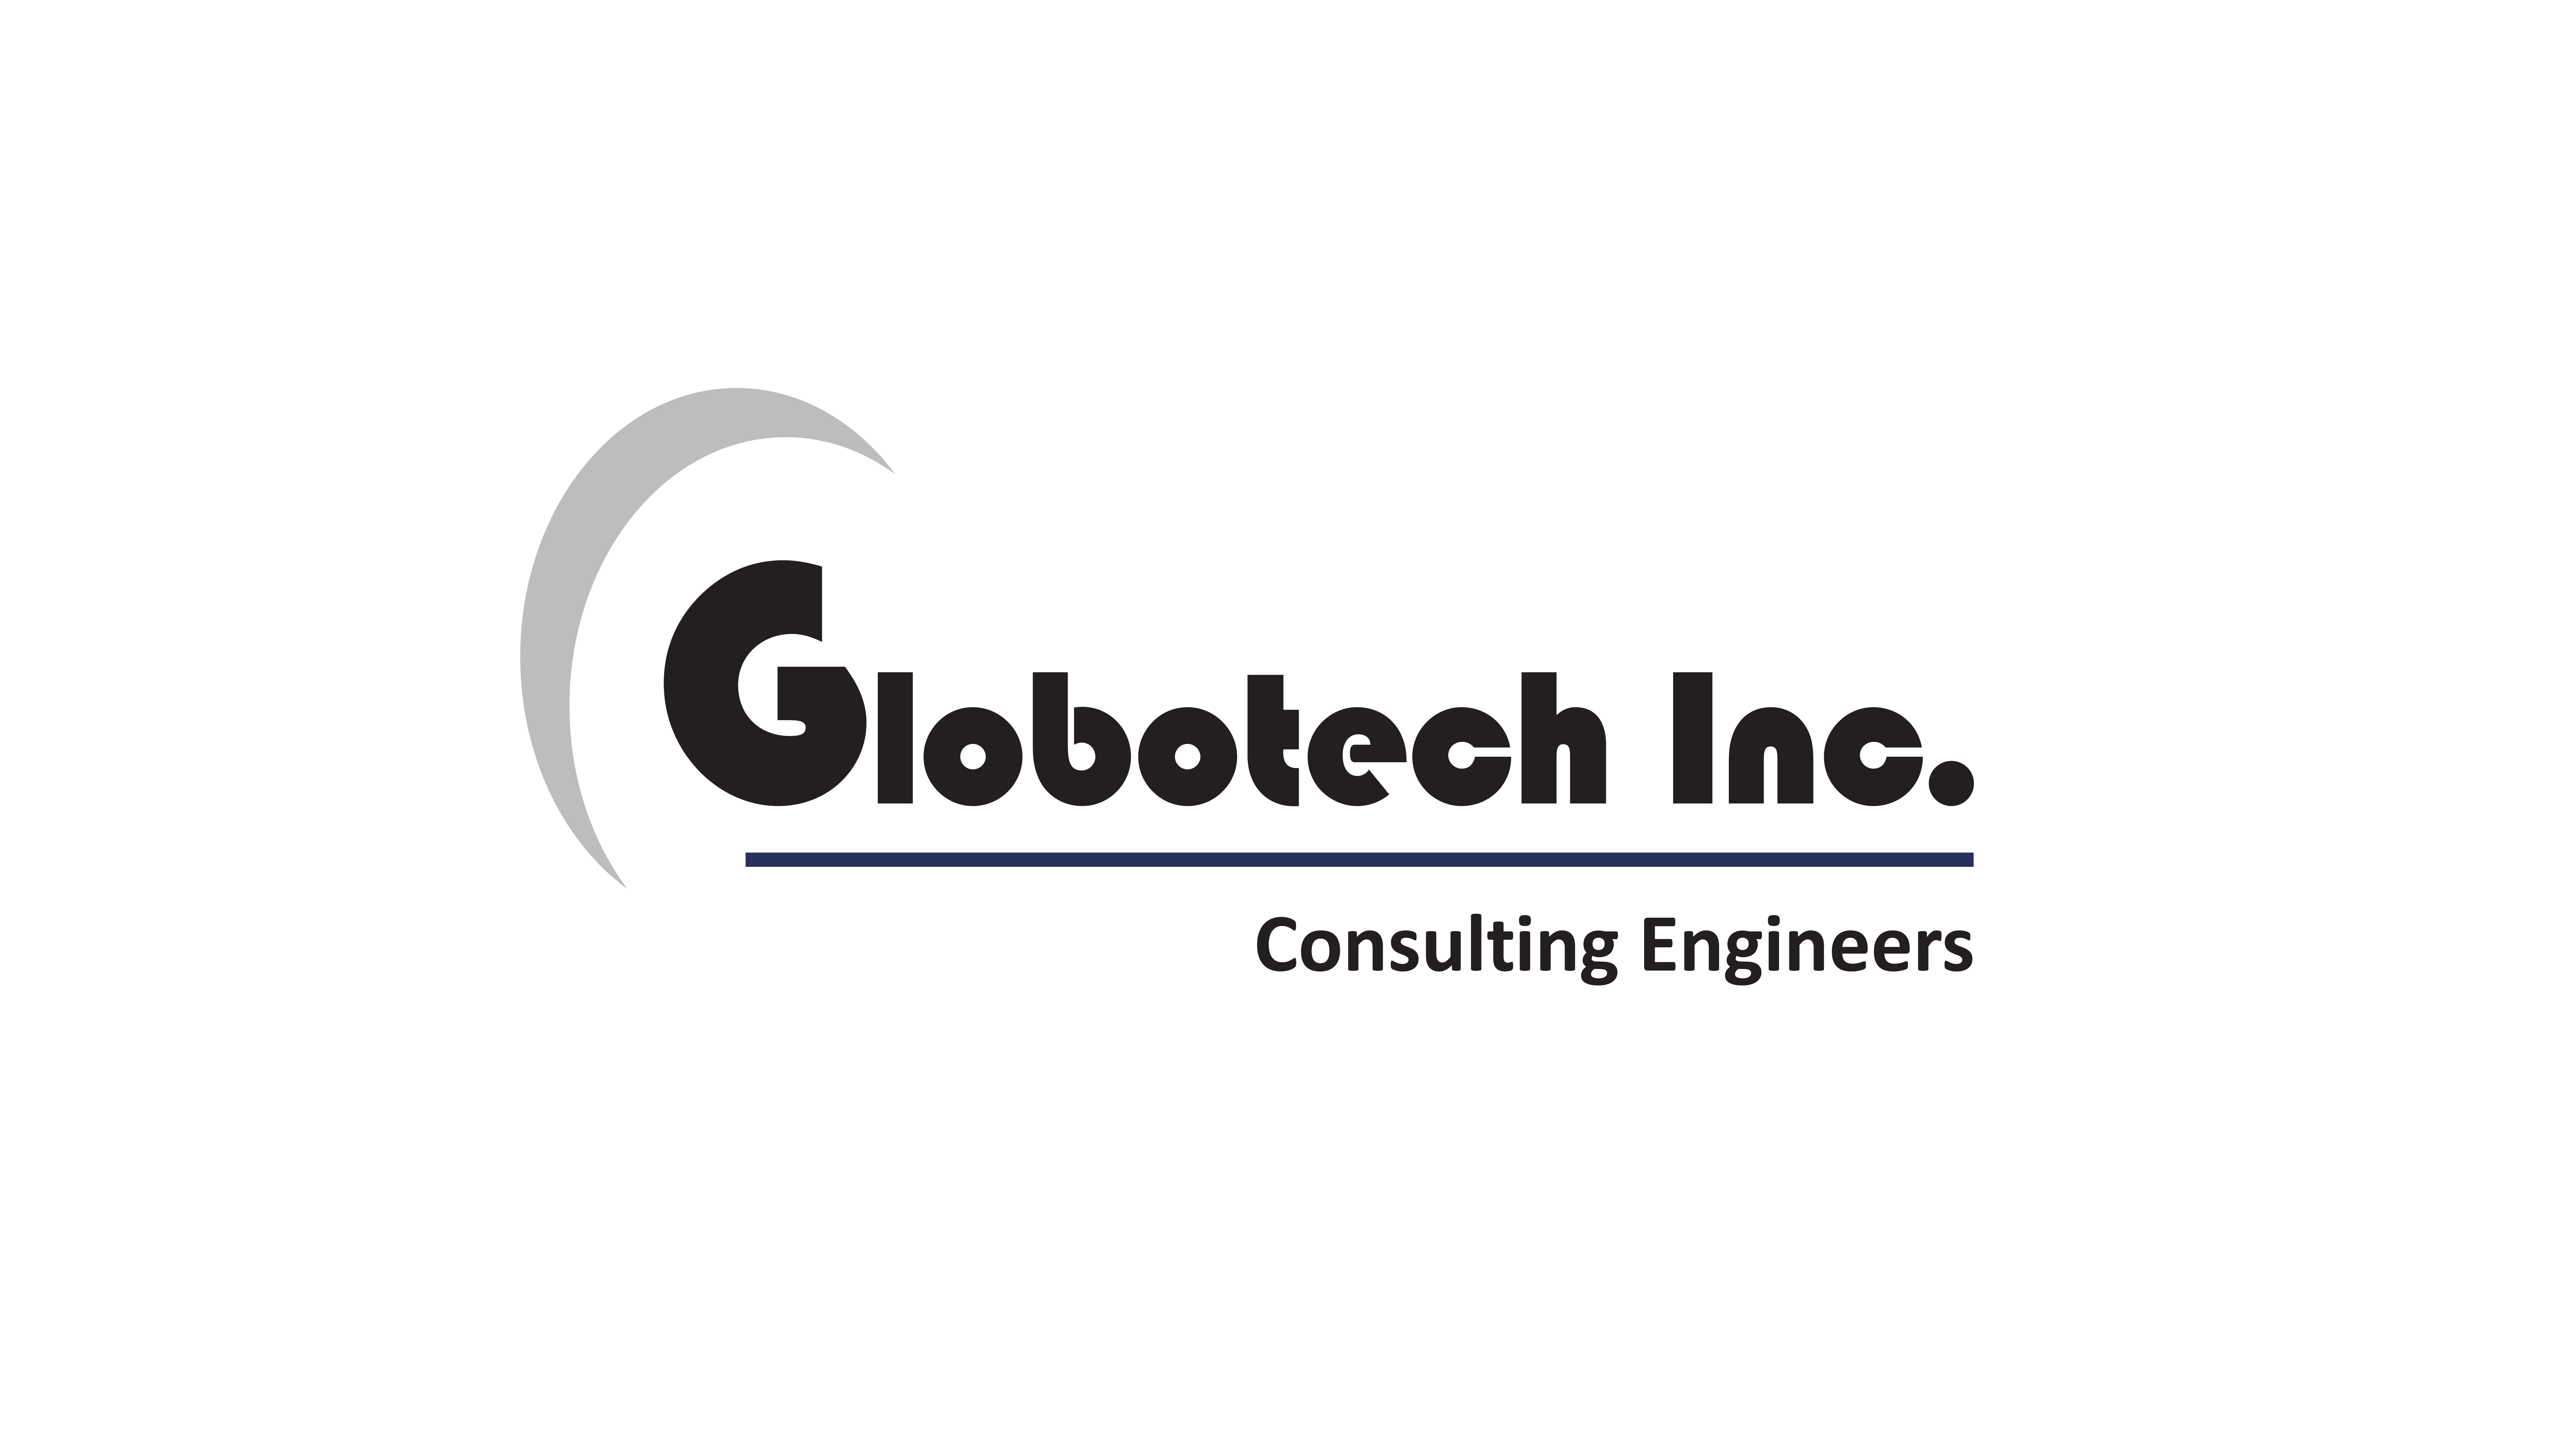 Globotech Inc. 